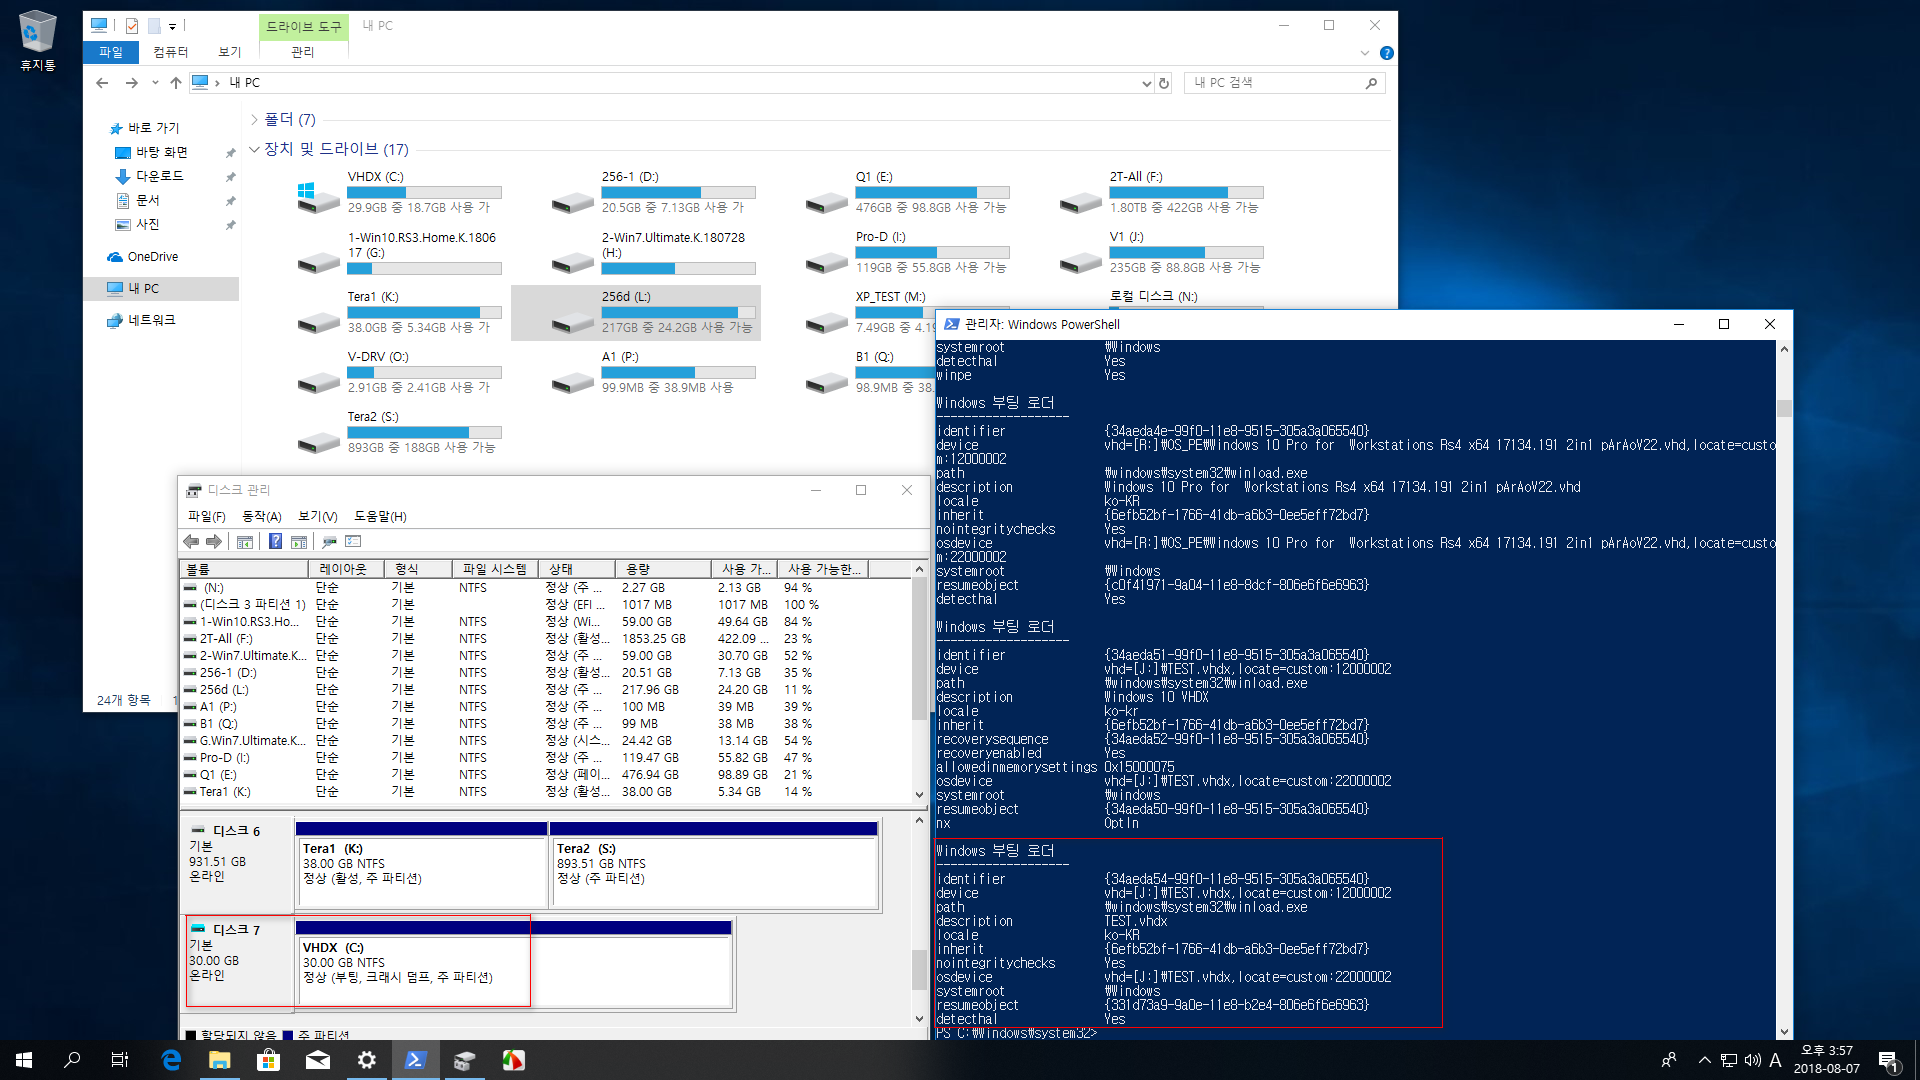 VHD와 VHDX 부팅등록 [우클릭] 테스트 - 윈도7 설치하여 - 이번에는 윈도10 vhdx 를 만들어서 부팅 등록 테스트 - 실컴이라서 스샷은 못 했는데 부팅 때 0xc03a0001 - bcd 구성 에러 나옴 - bcdboot로 윈도10용 부팅 파일을 만든후 다시 부팅등록함 - 부팅 성공 2018-08-07_155747.png